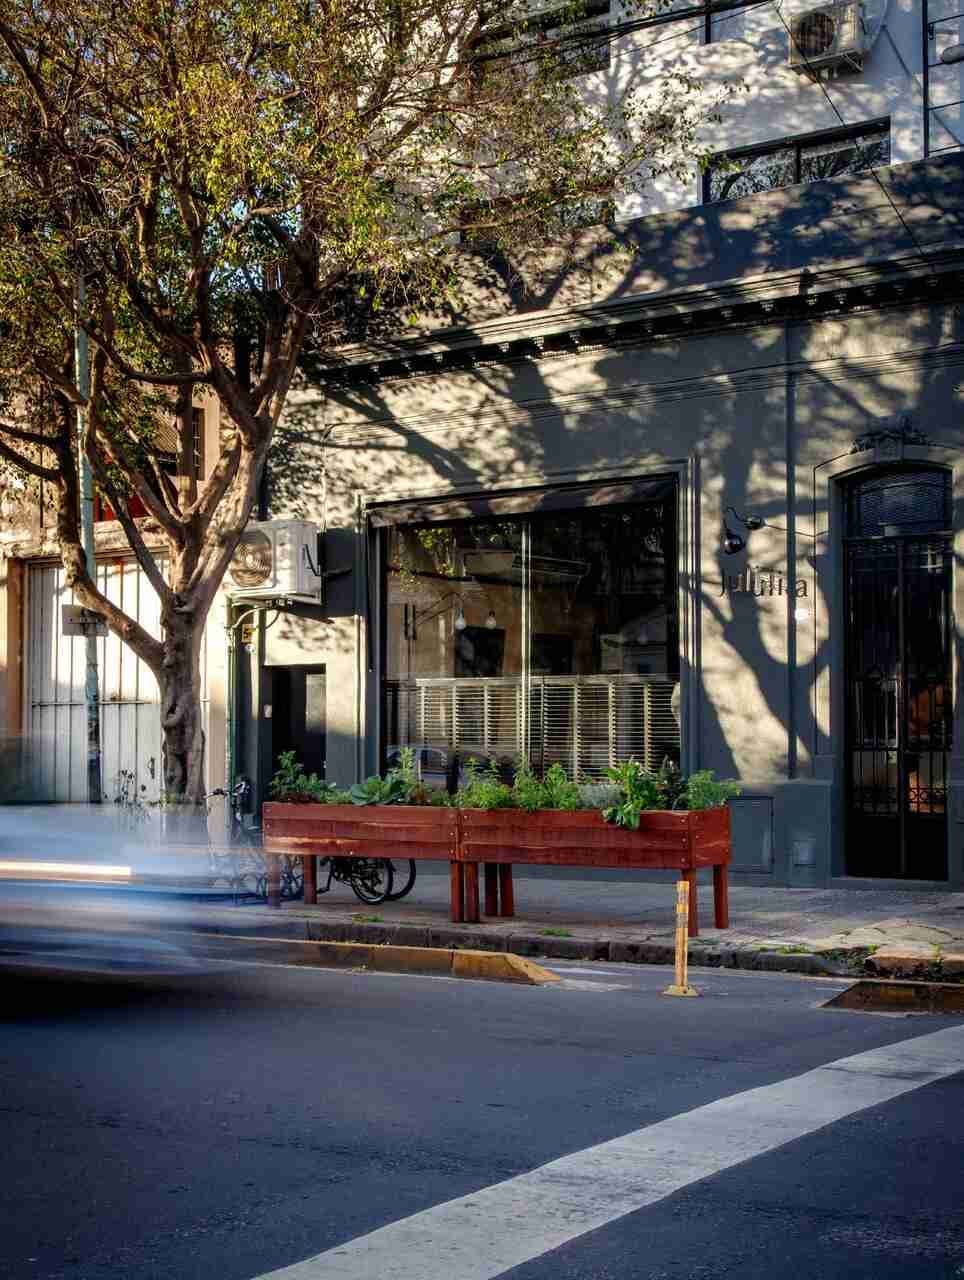 bench furniture city road street urban potted plant neighborhood tarmac path